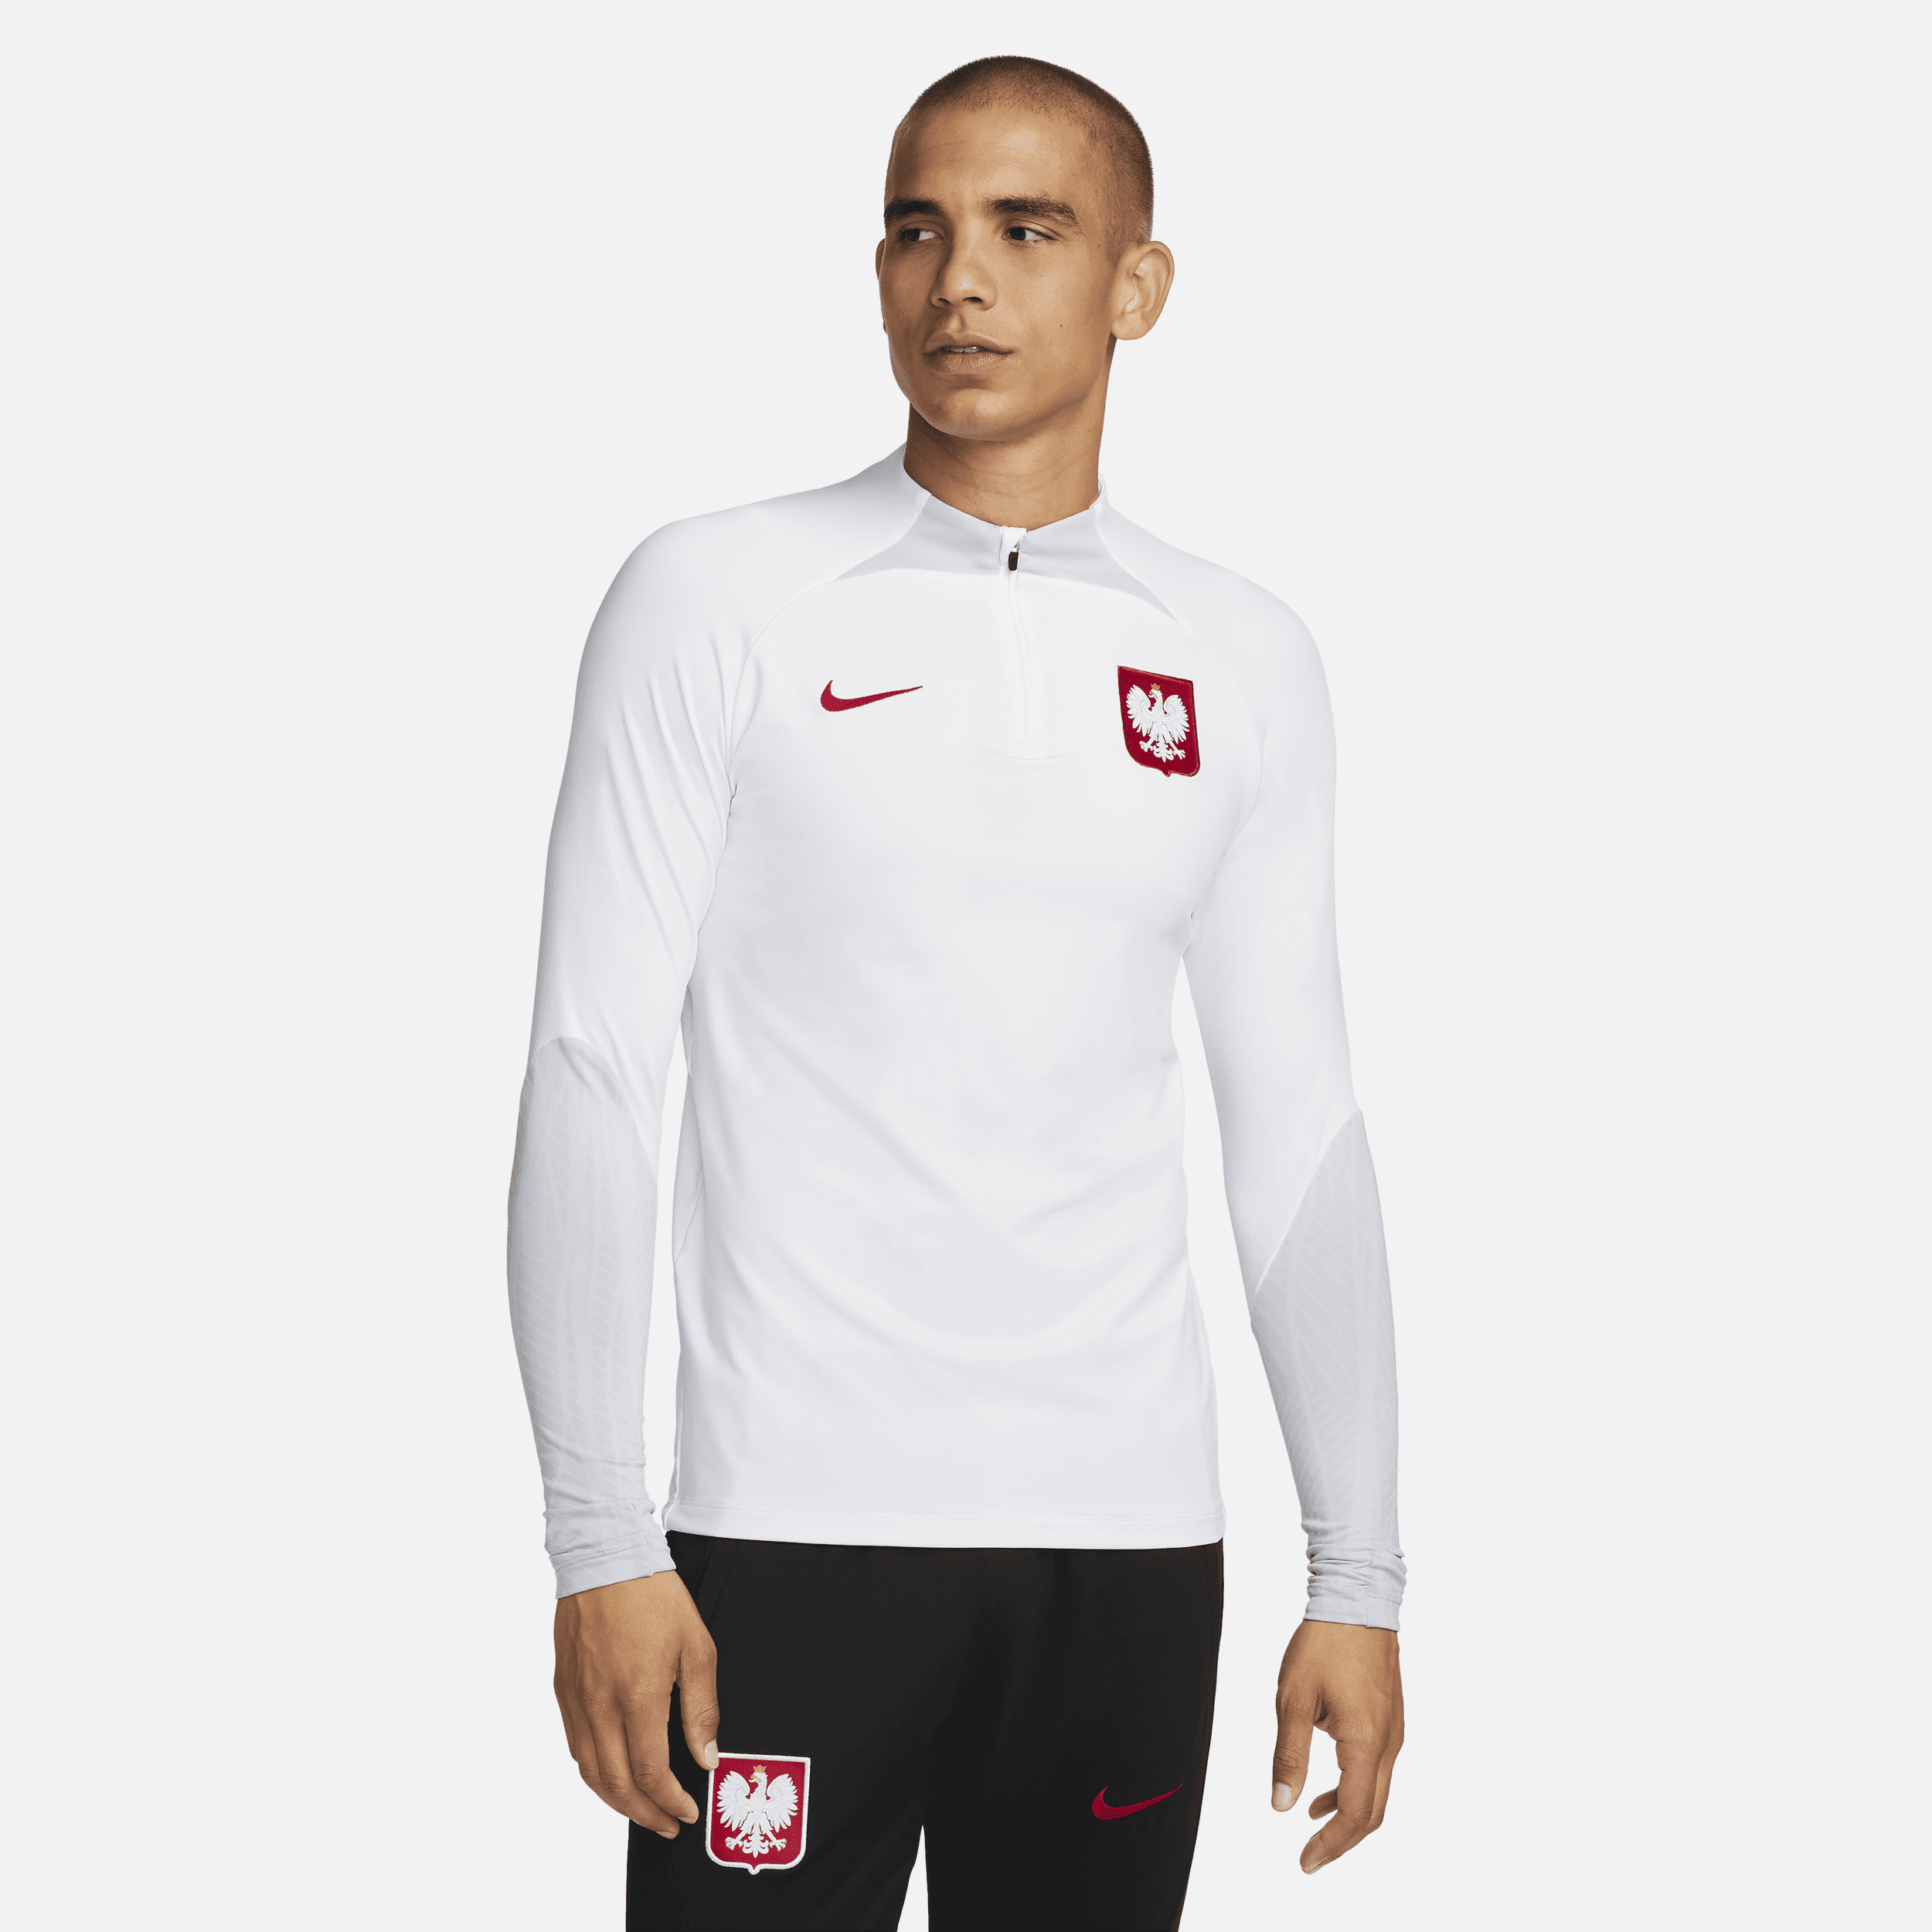 Polen Strike Nike Dri-FIT knit voetbaltrainingstop voor heren - Wit